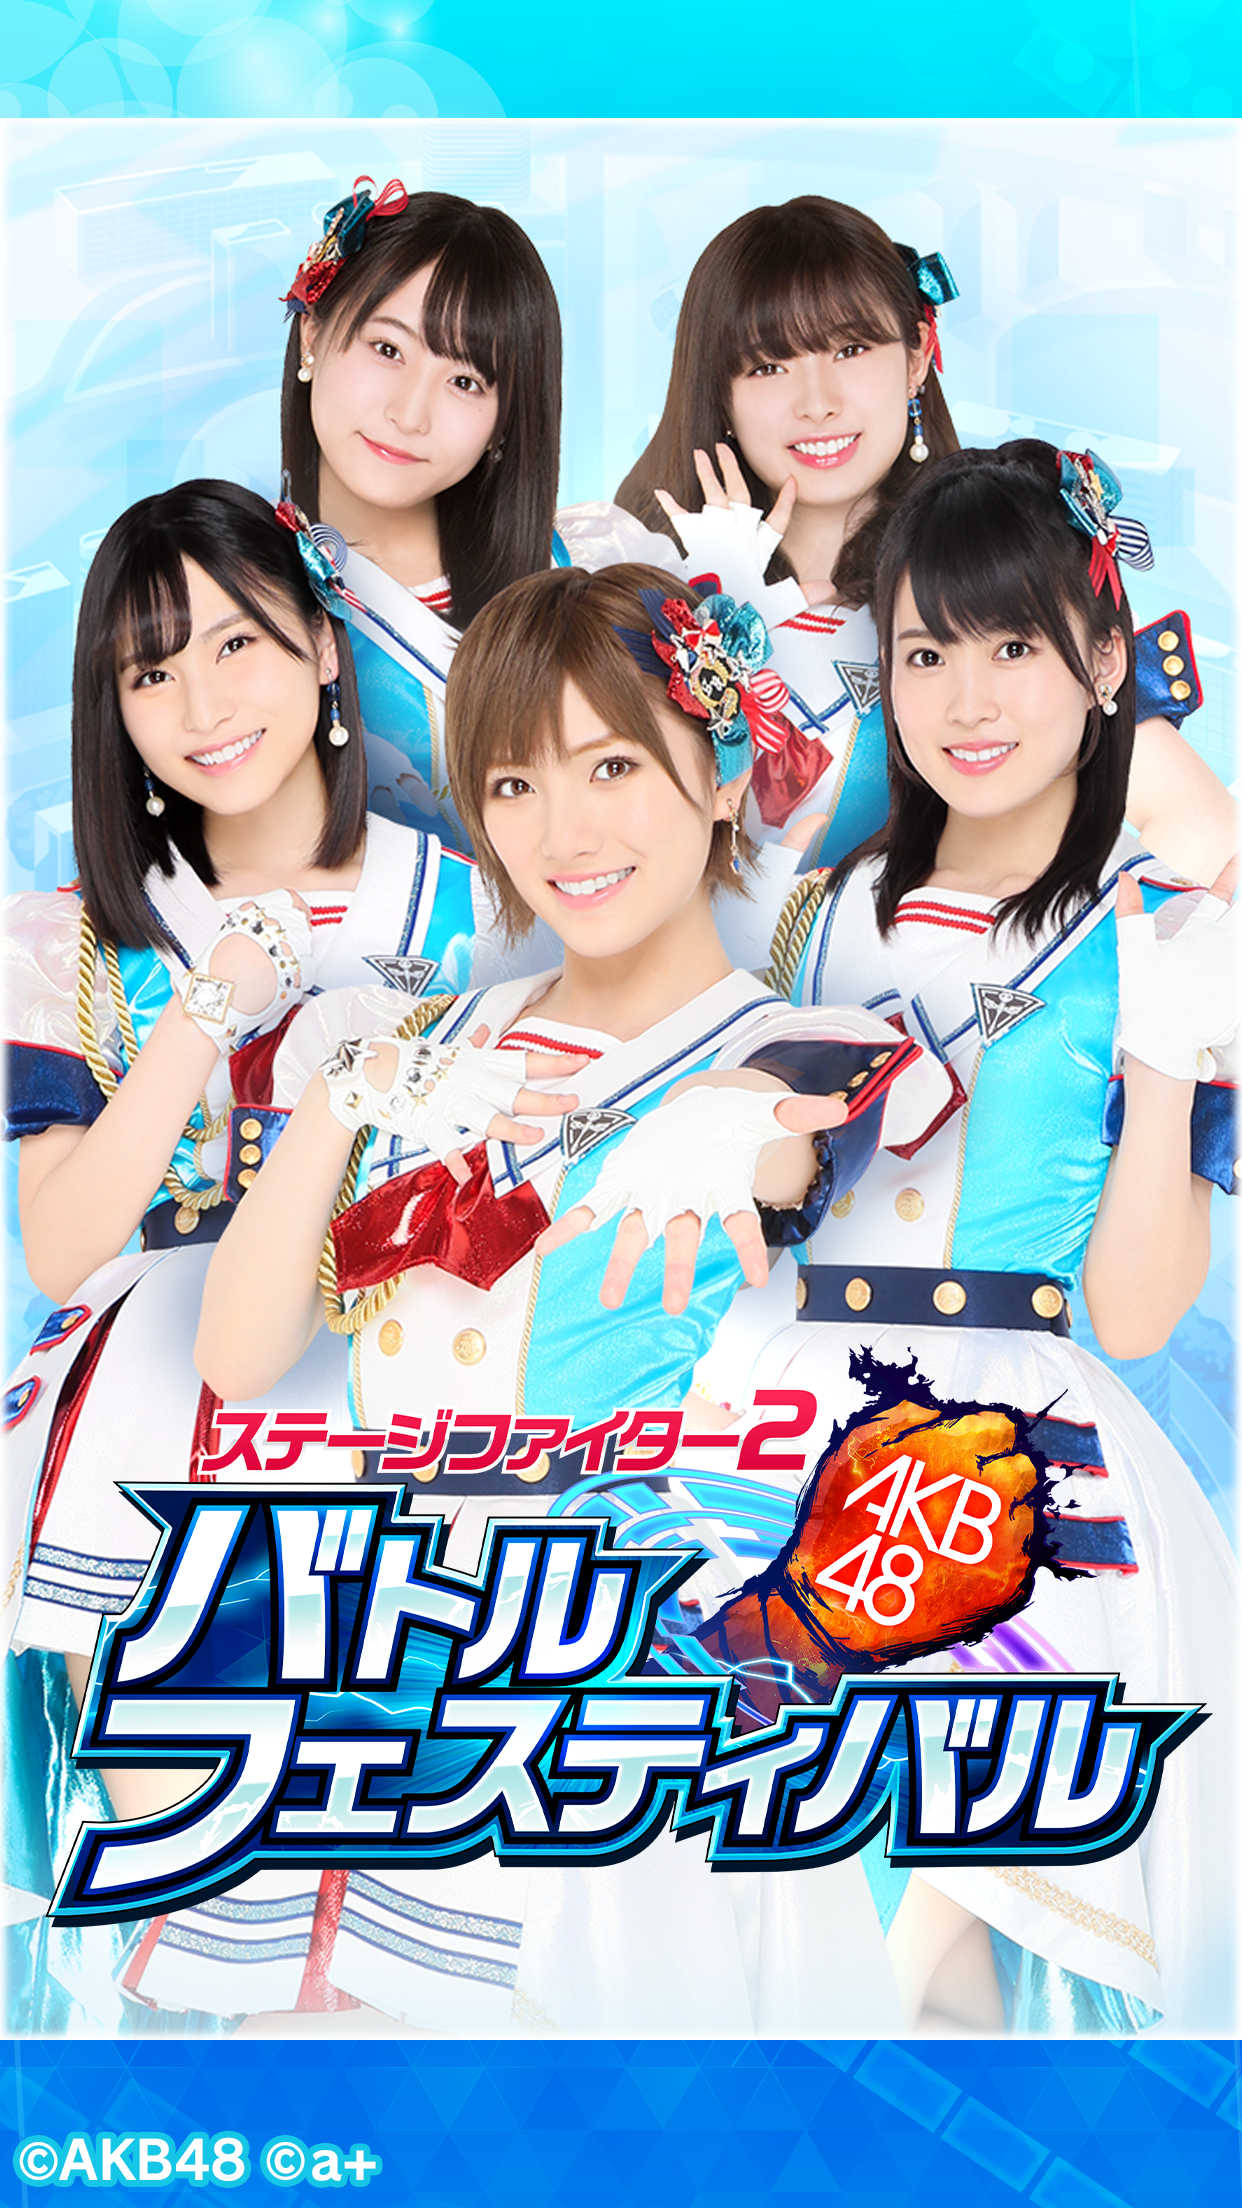 Screenshot 1 of AKB48 Stage Fighter 2 Batalla Festival 3.9.5